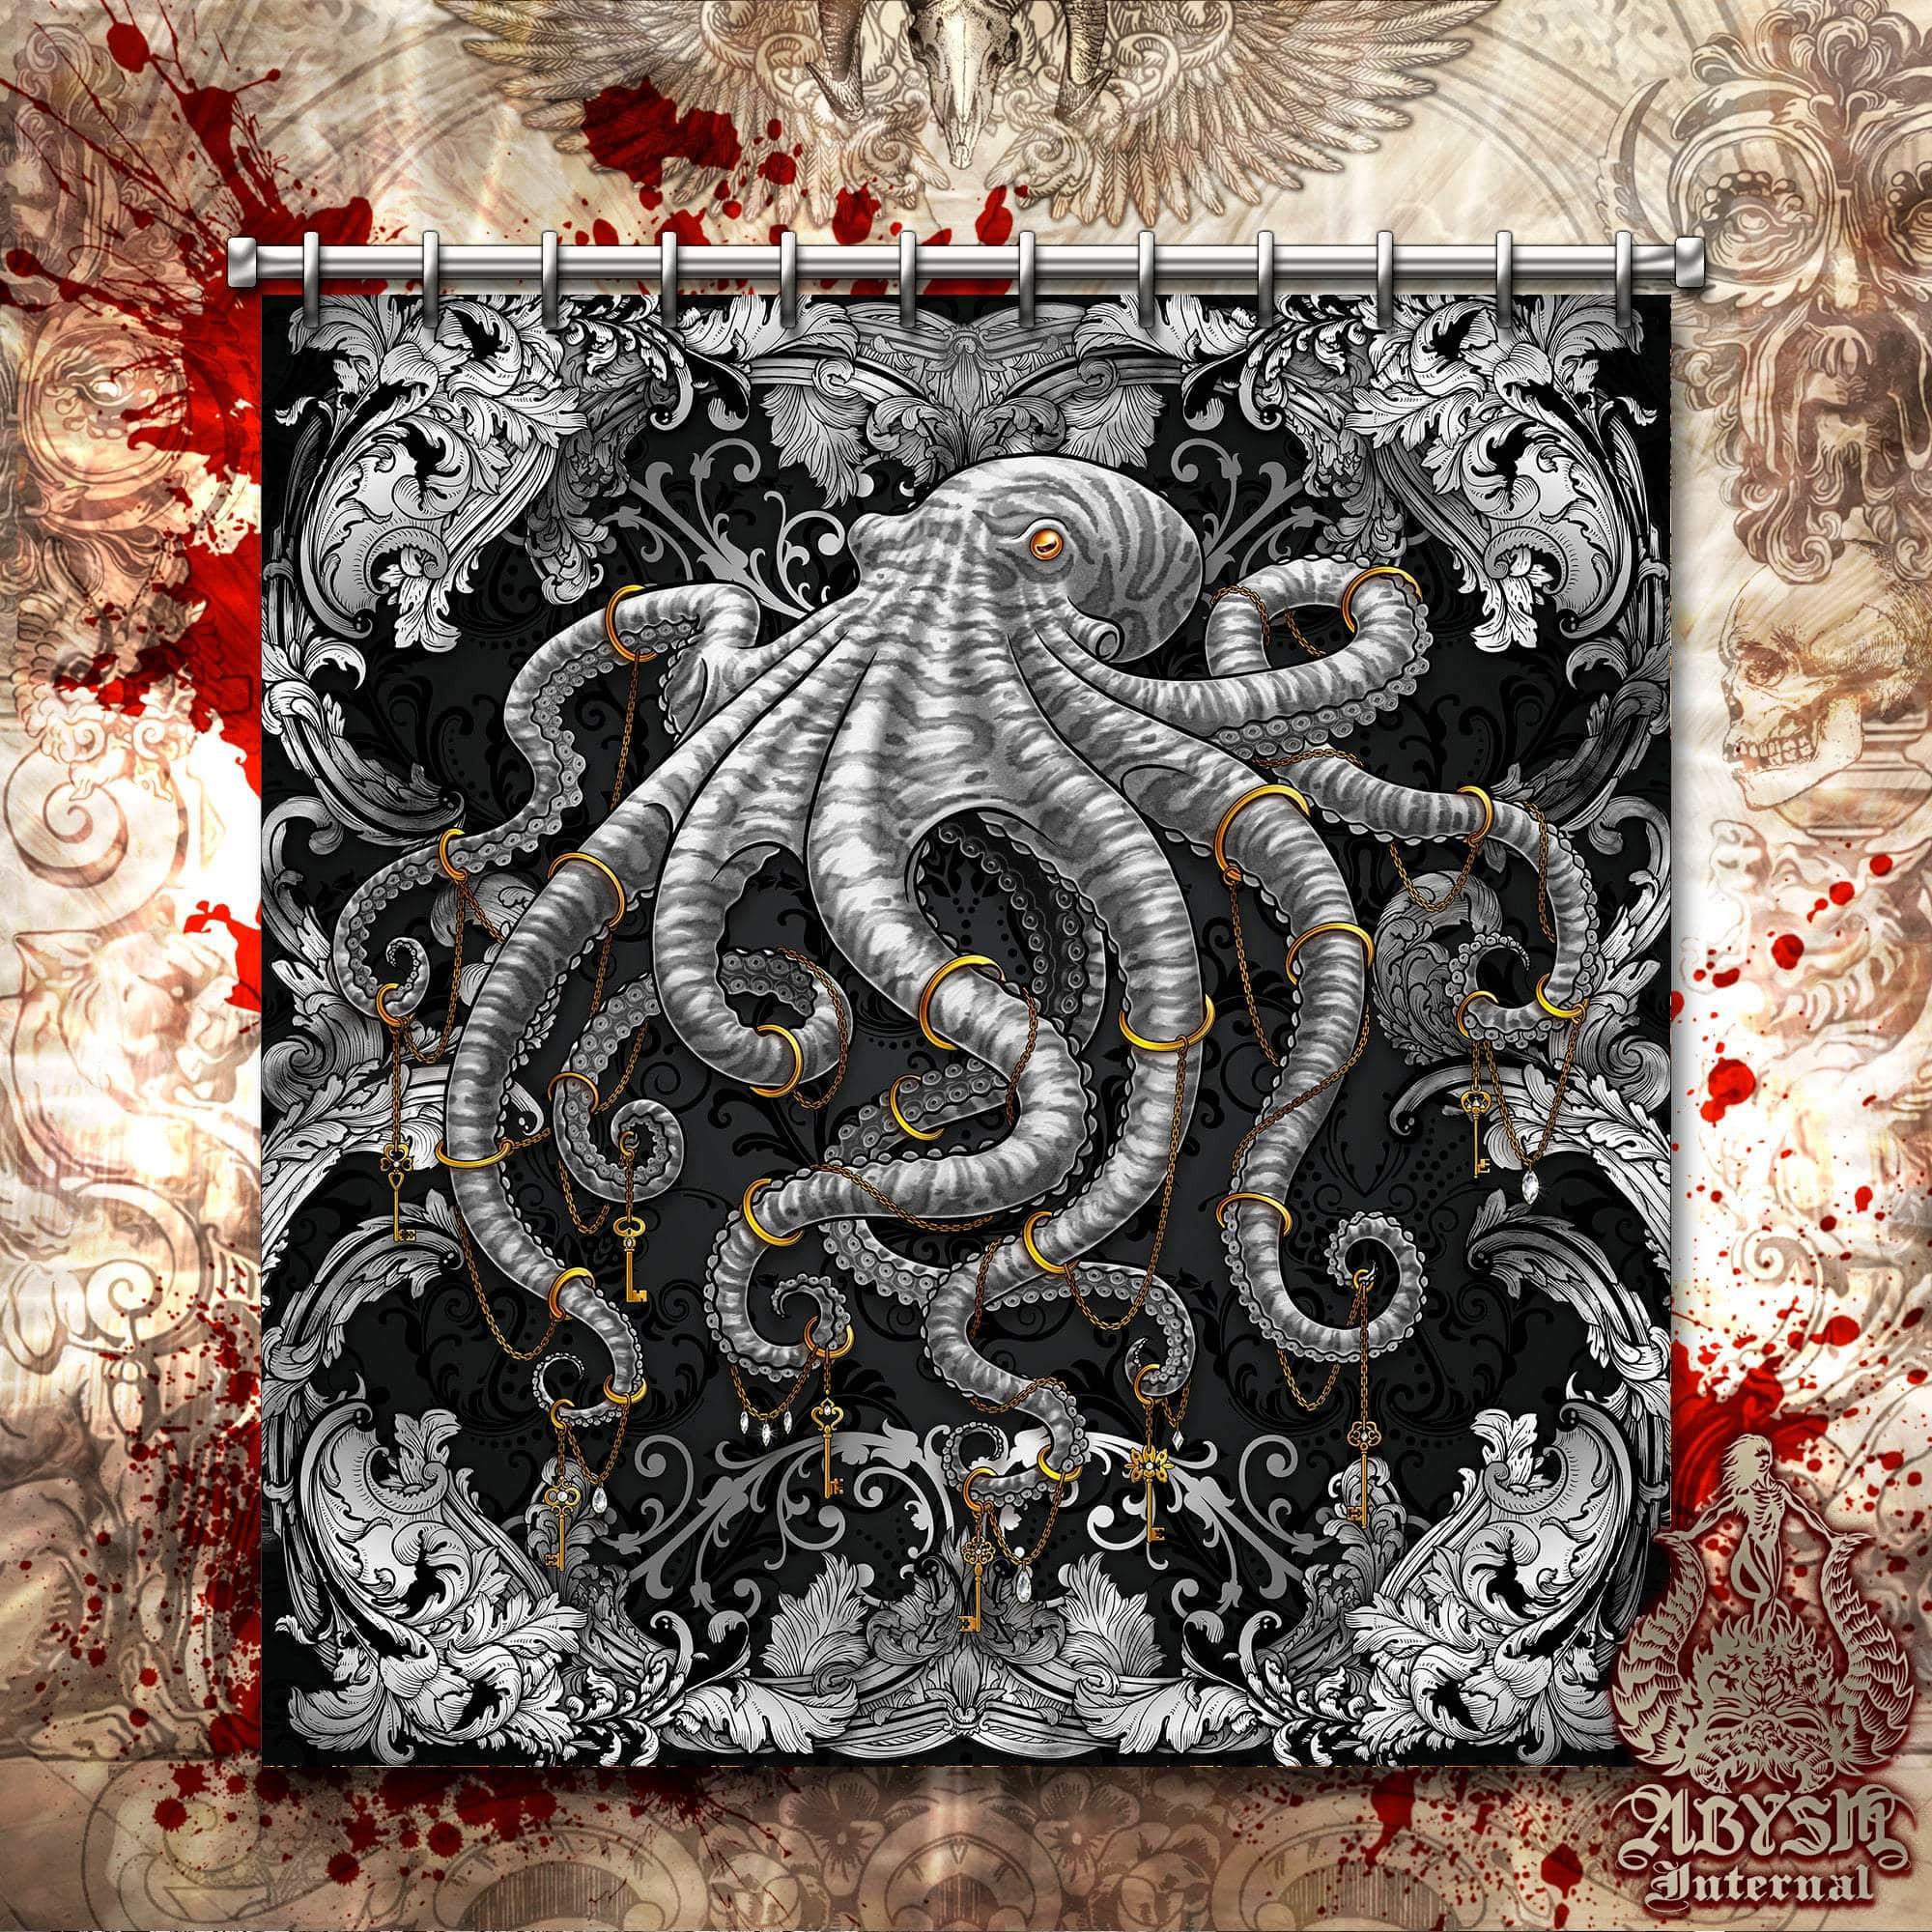 Octopus Shower Curtain, Coastal Home and Bathroom Decor - Silver & Black - Abysm Internal